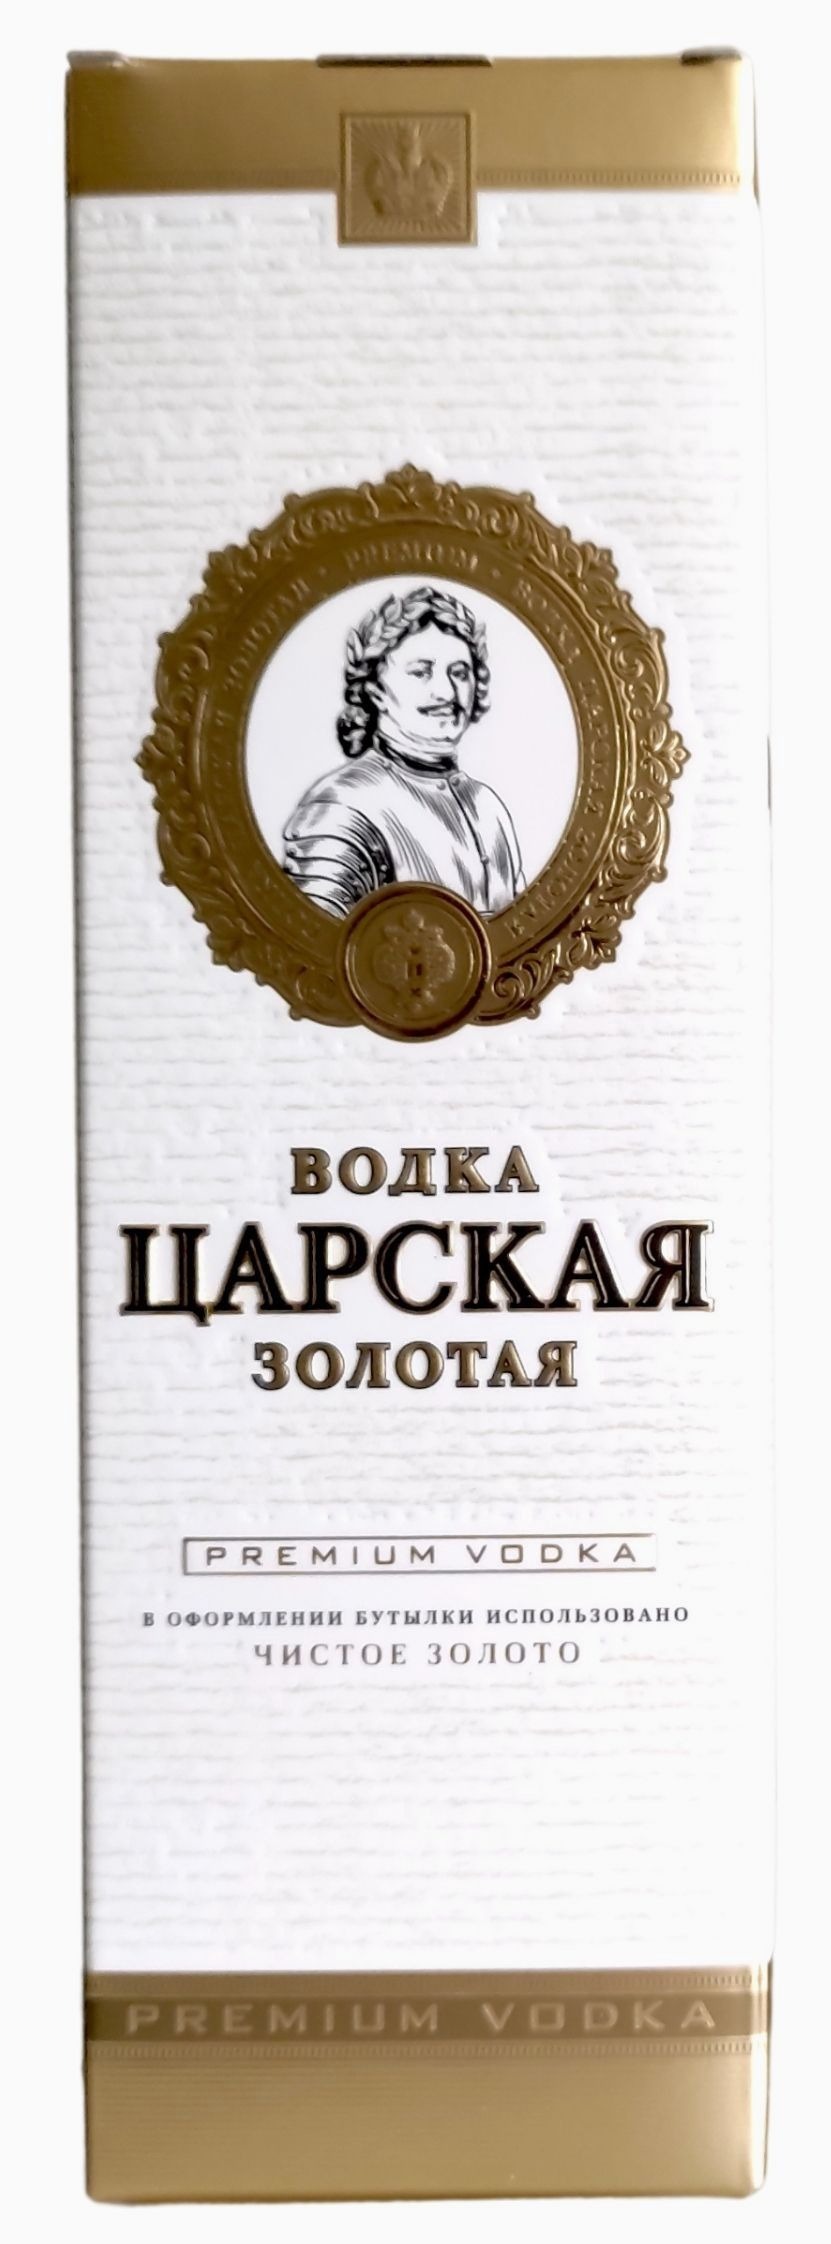 Vodka Tsarskaya Gold 500ml+étuis